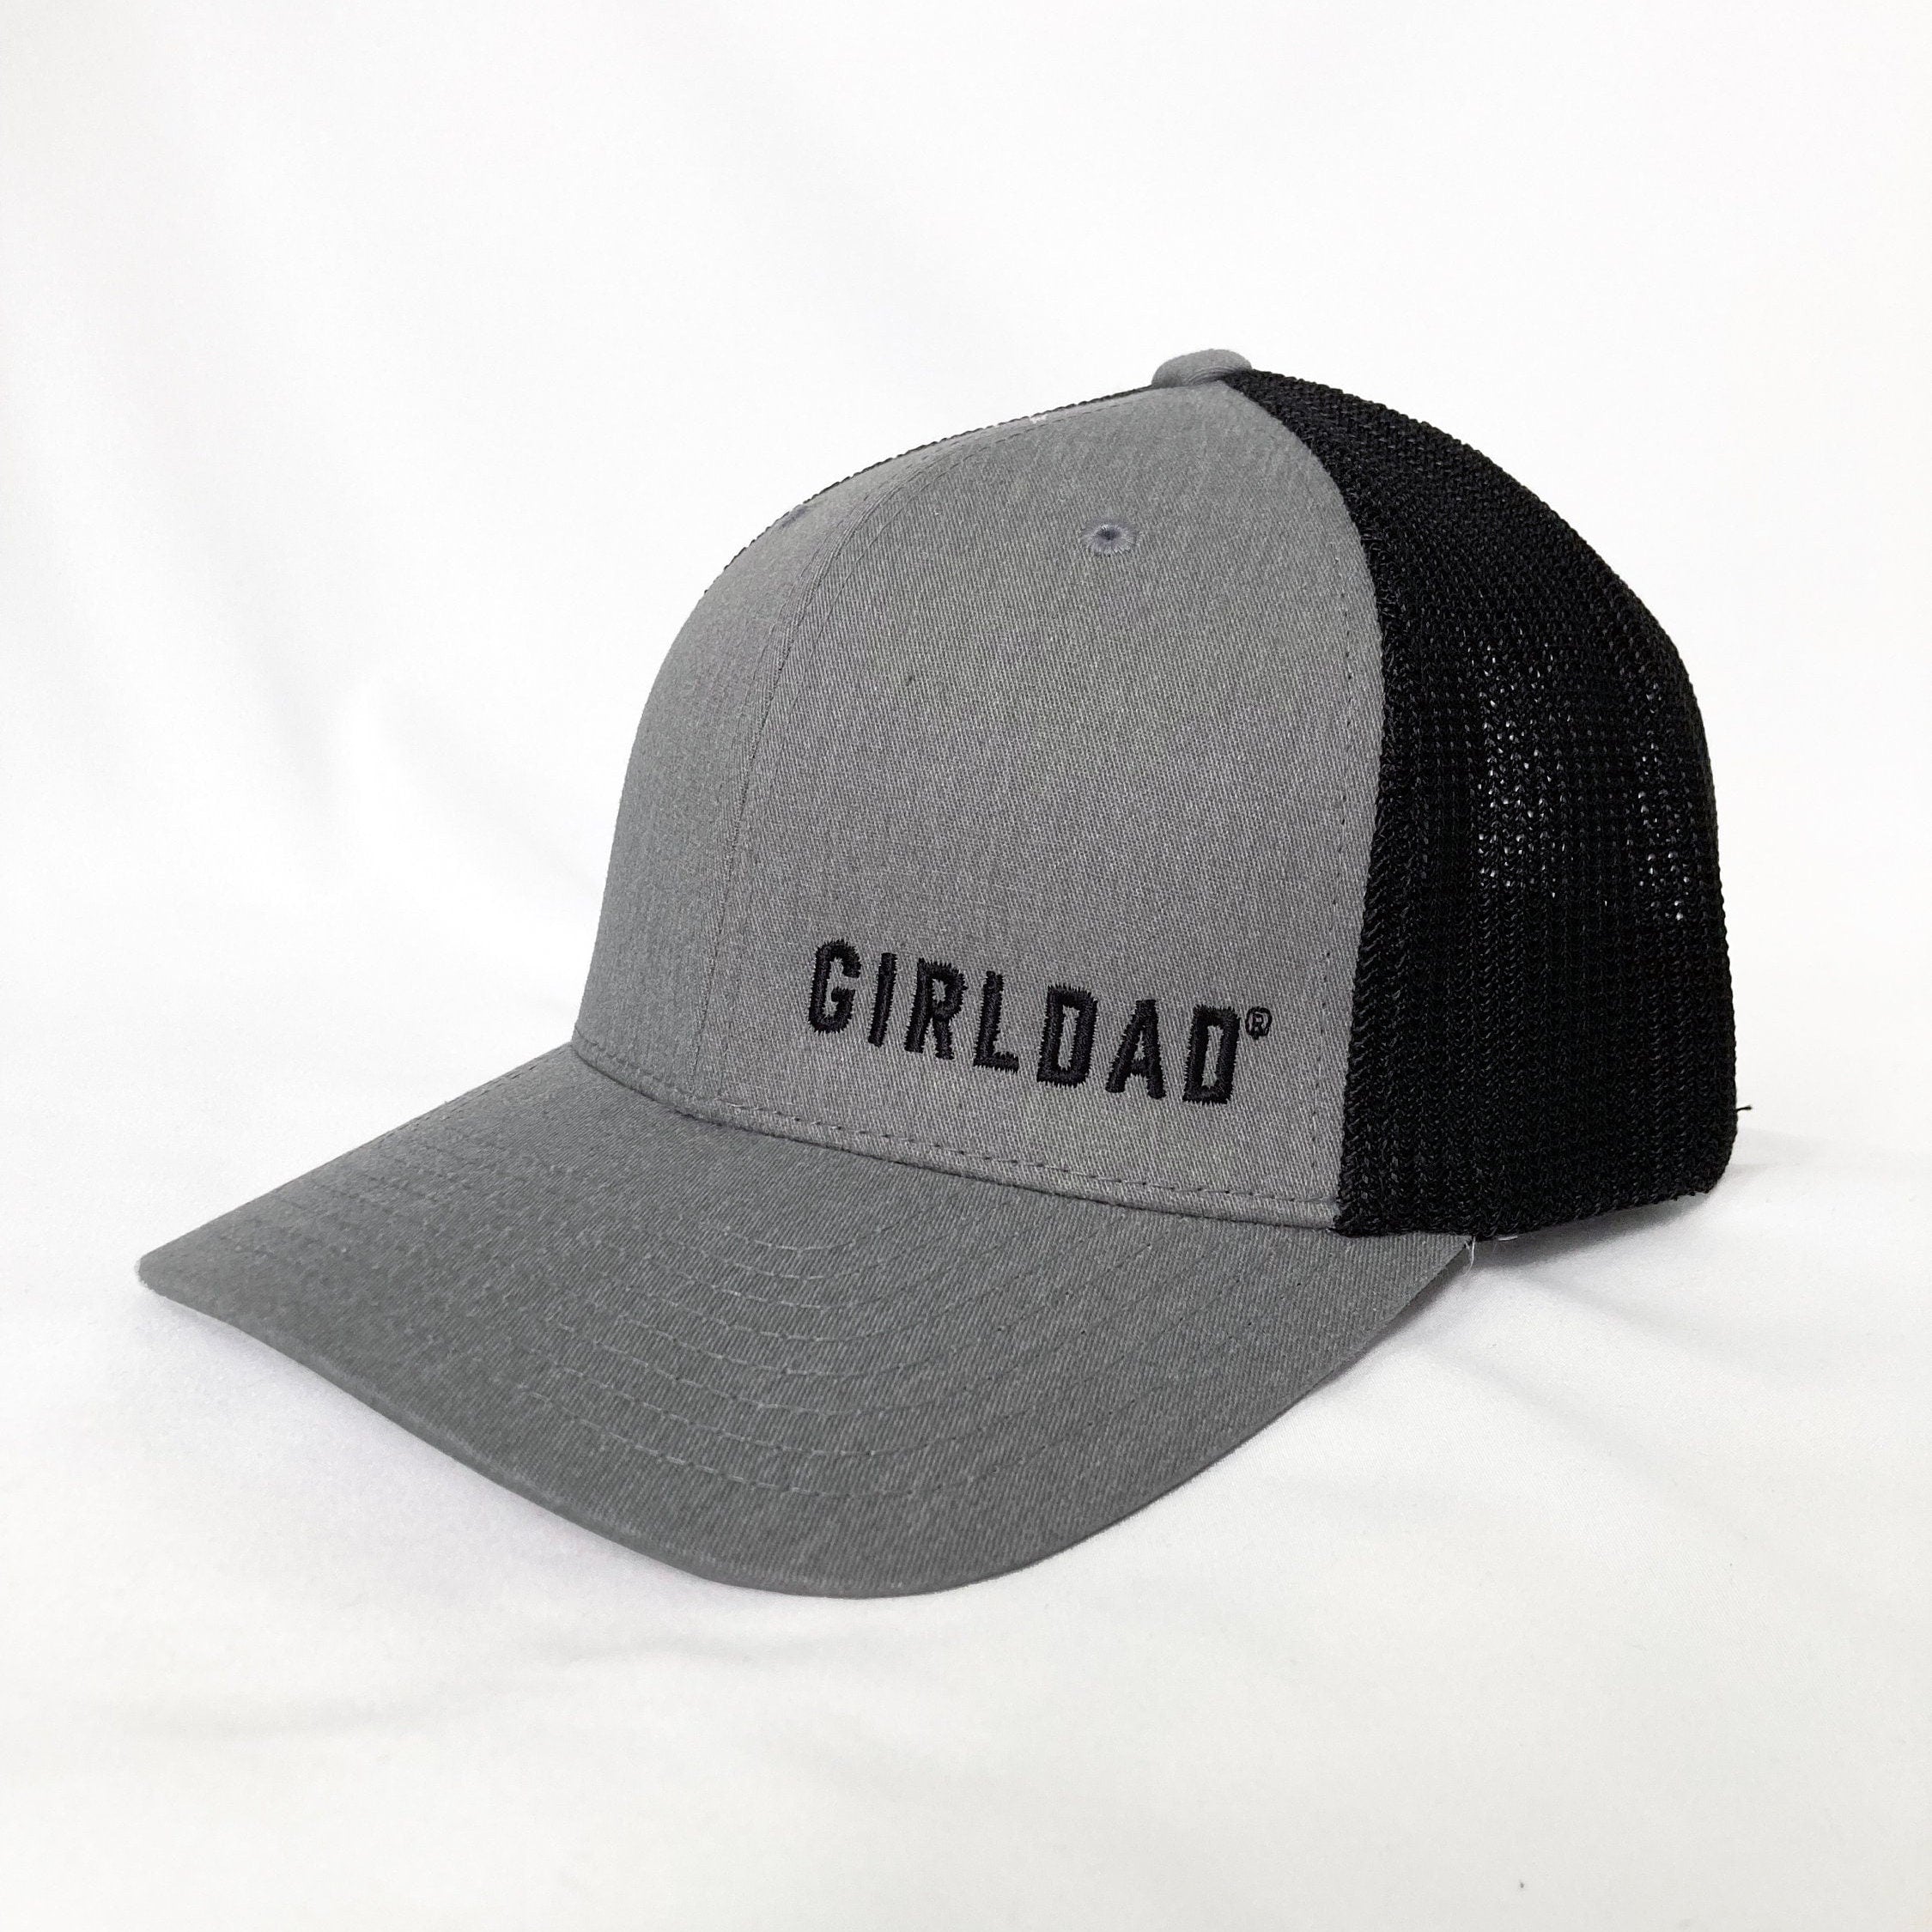 Girldad® Heather Grey/Black  Mesh Back Embroidered Flexfit Hat